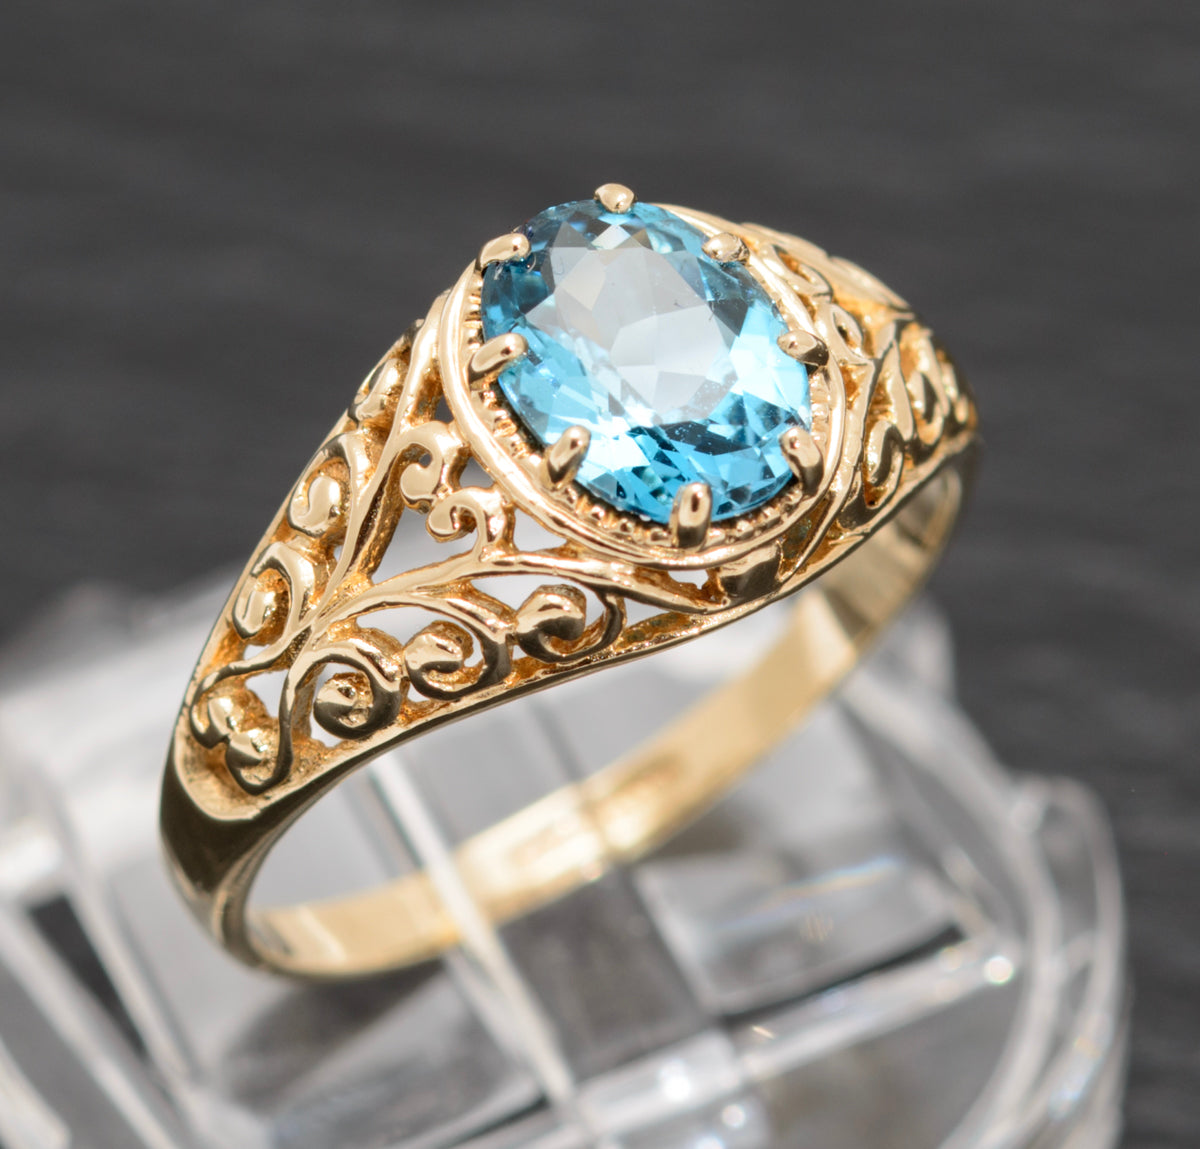 9ct Ladies Gold Ring With Natural Blue Topaz Gemstone Edinburgh Mark  (A1577)